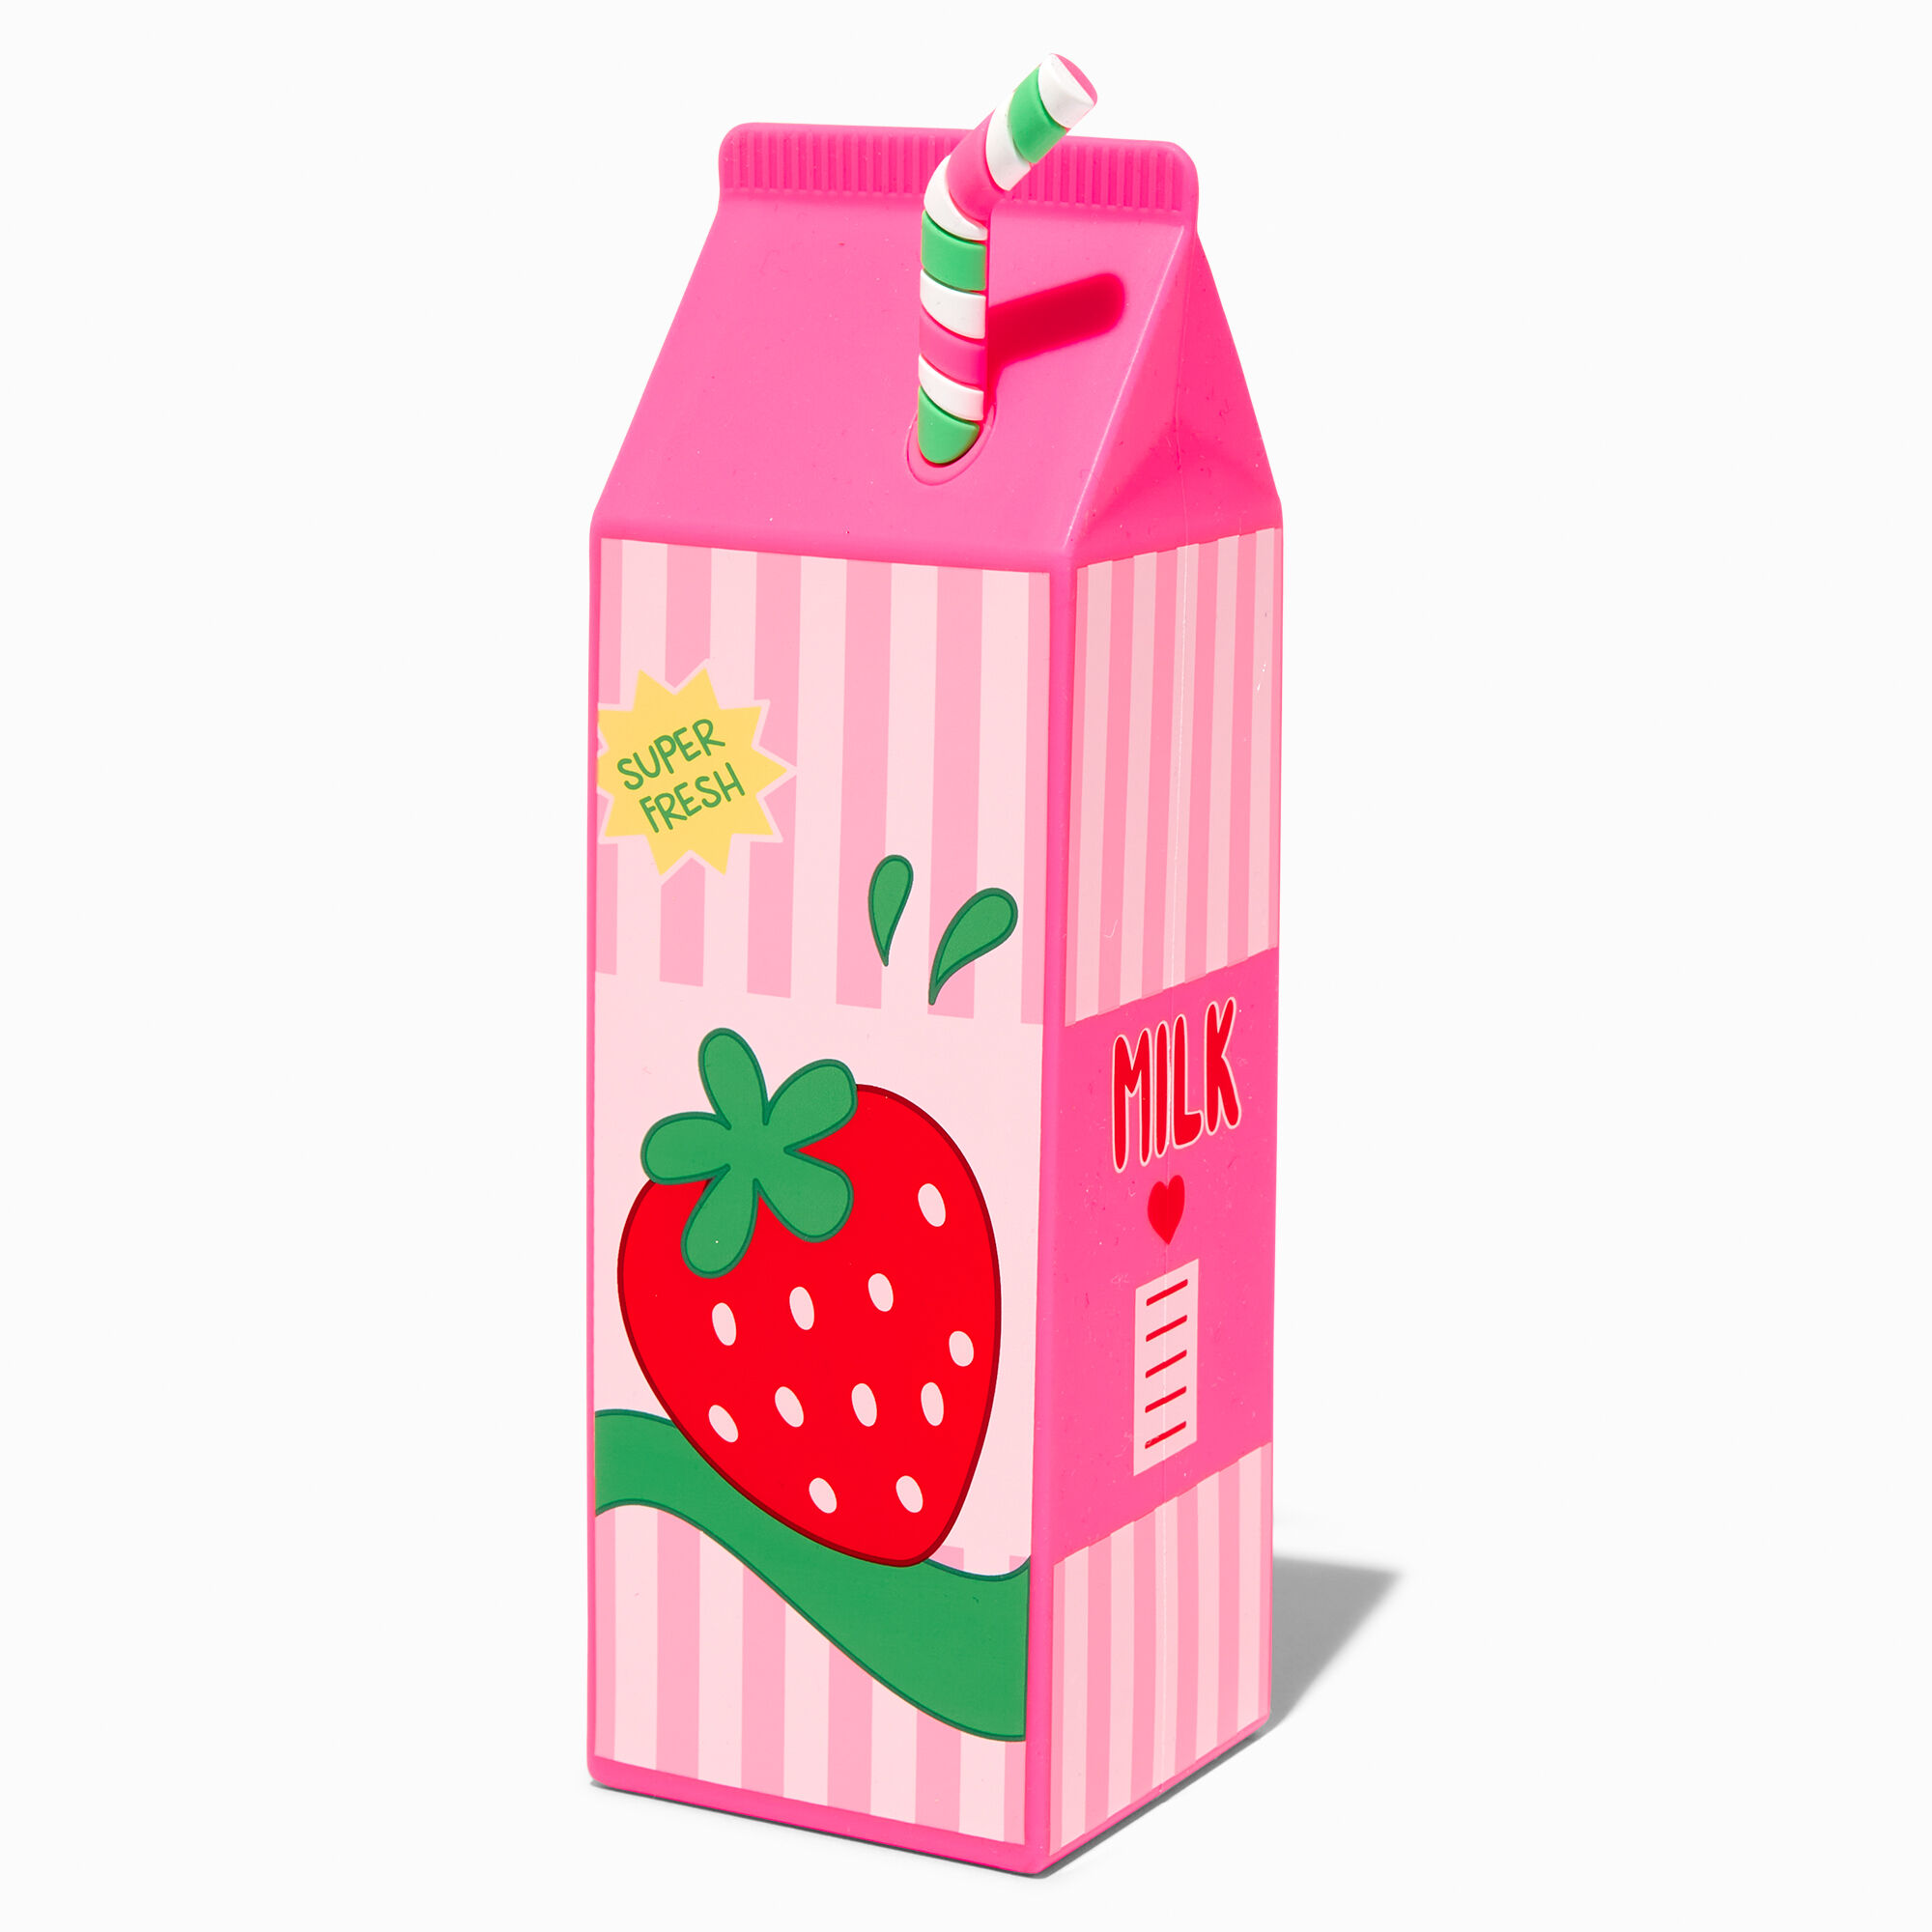 View Claires Strawberry Milk Carton Pencil Case information